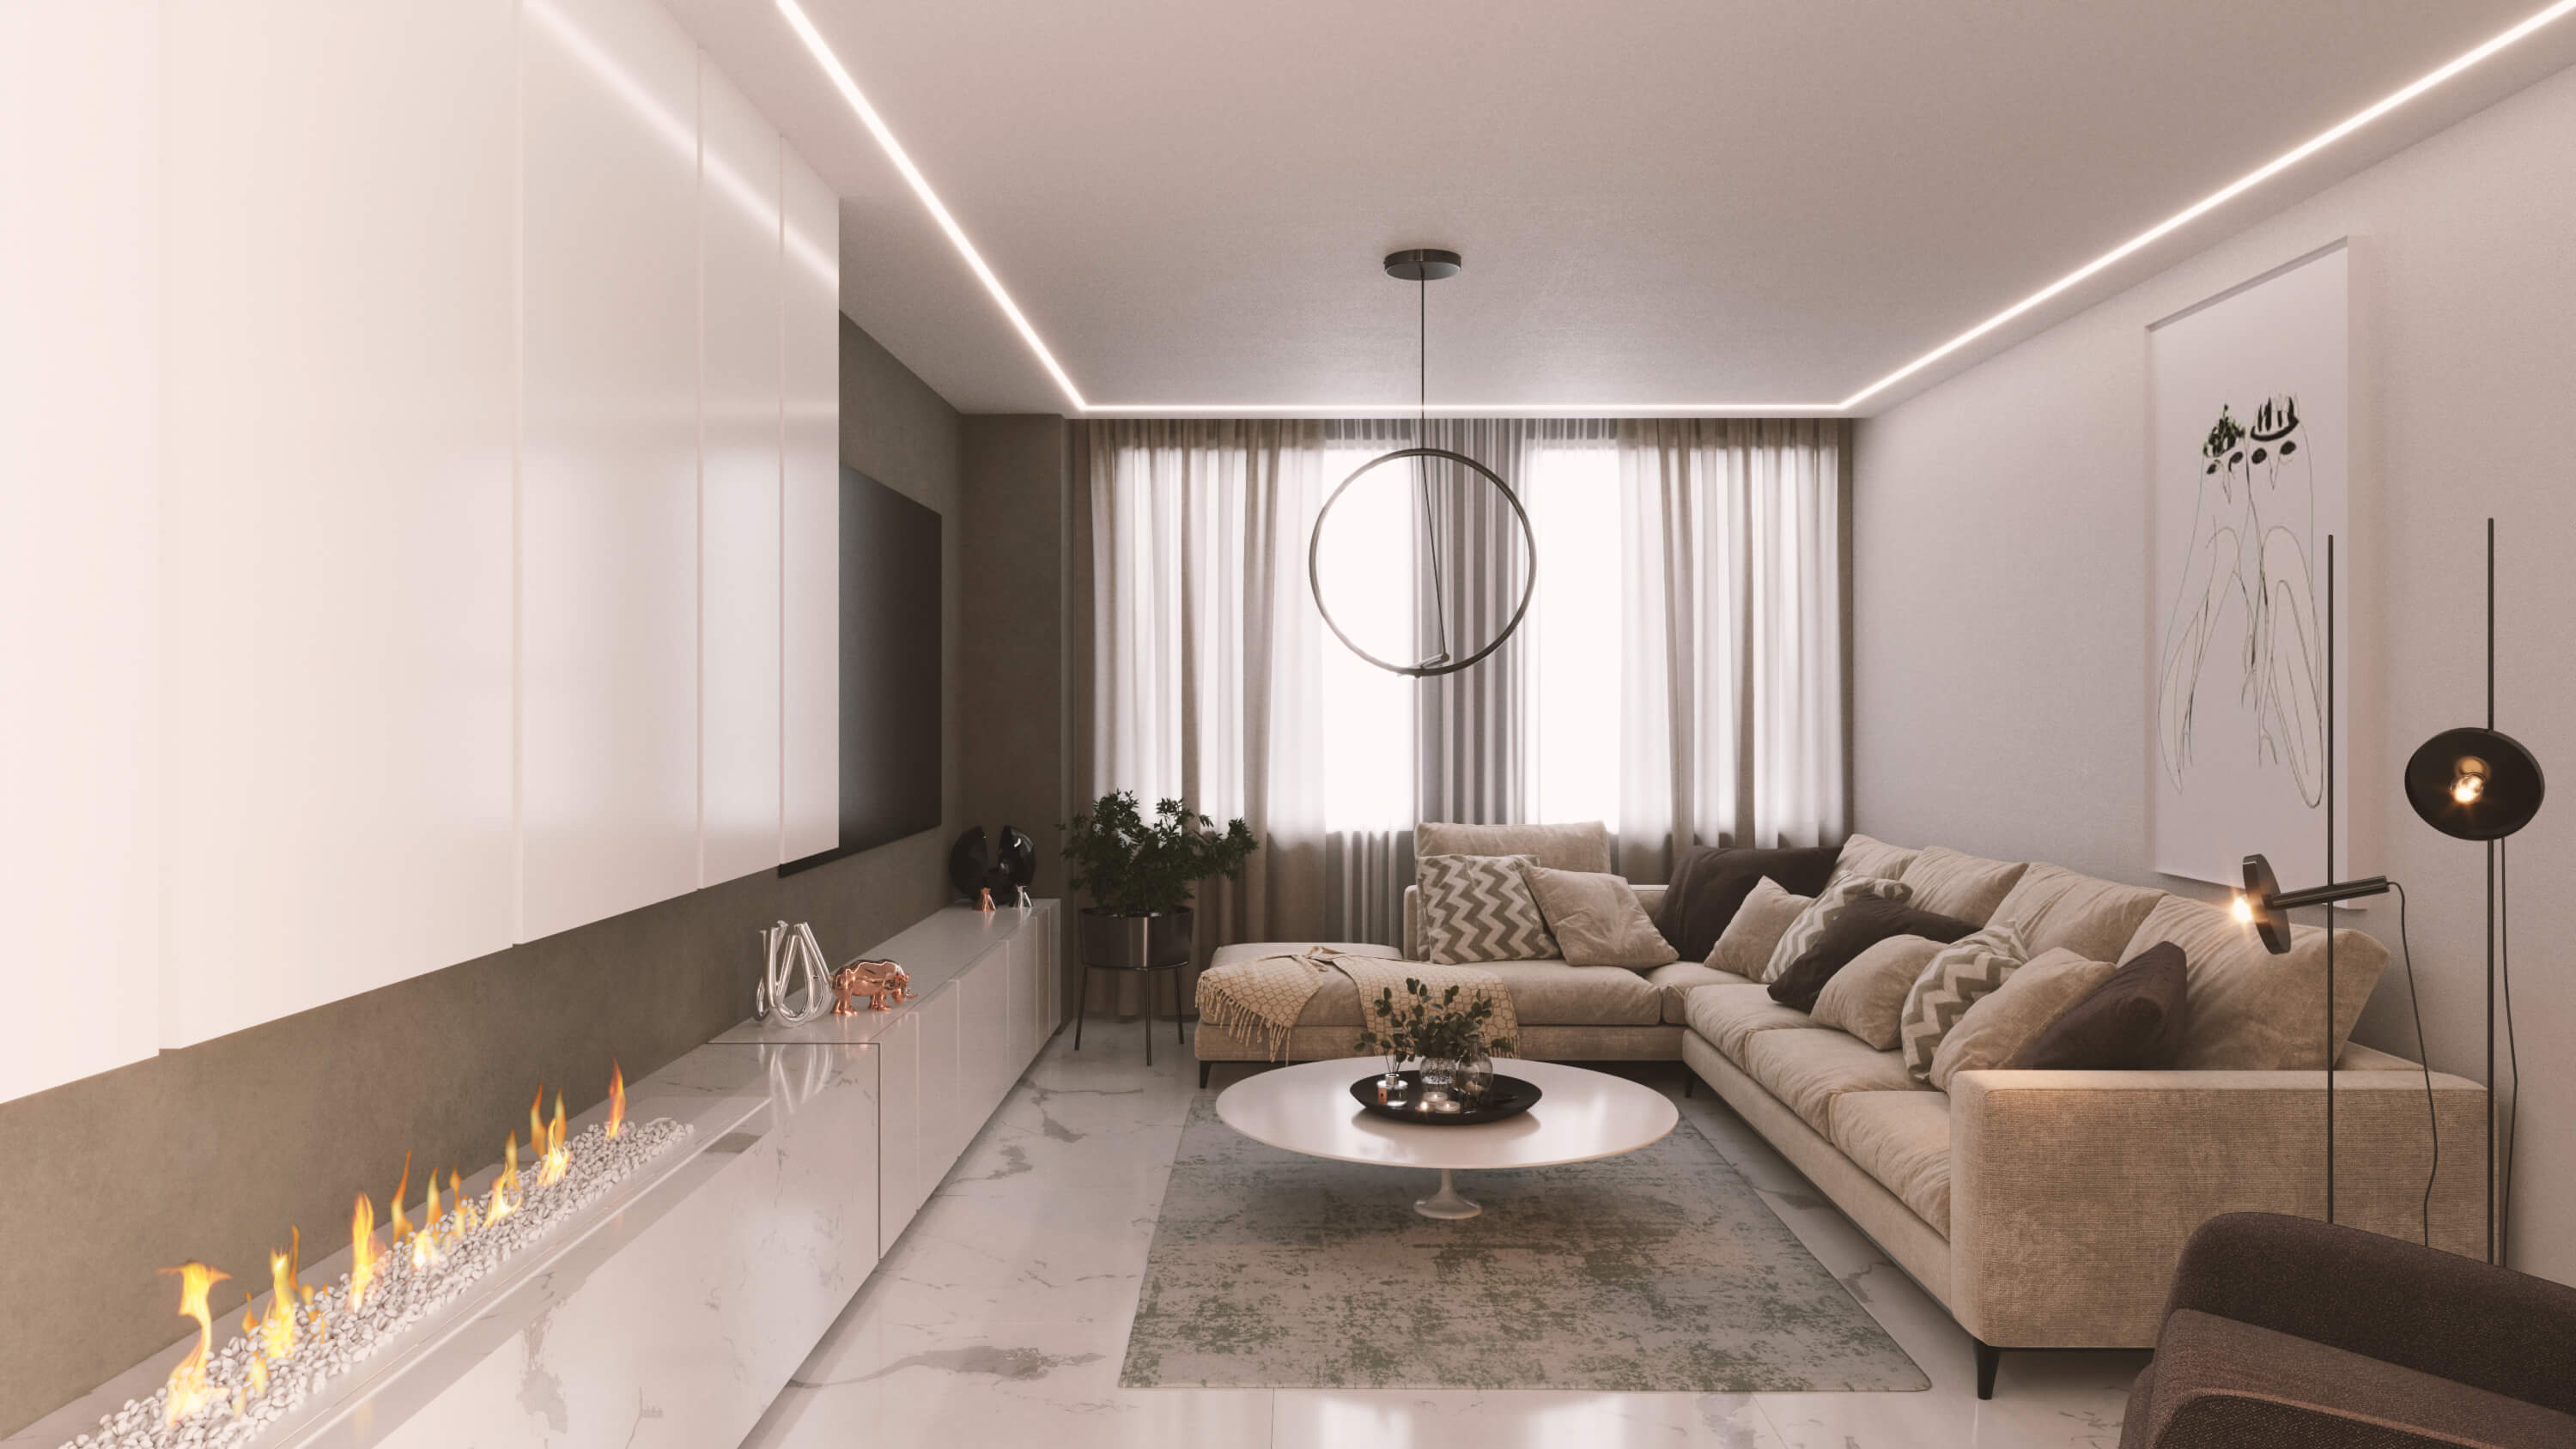 Khajeh Abdolah Apartment interior design